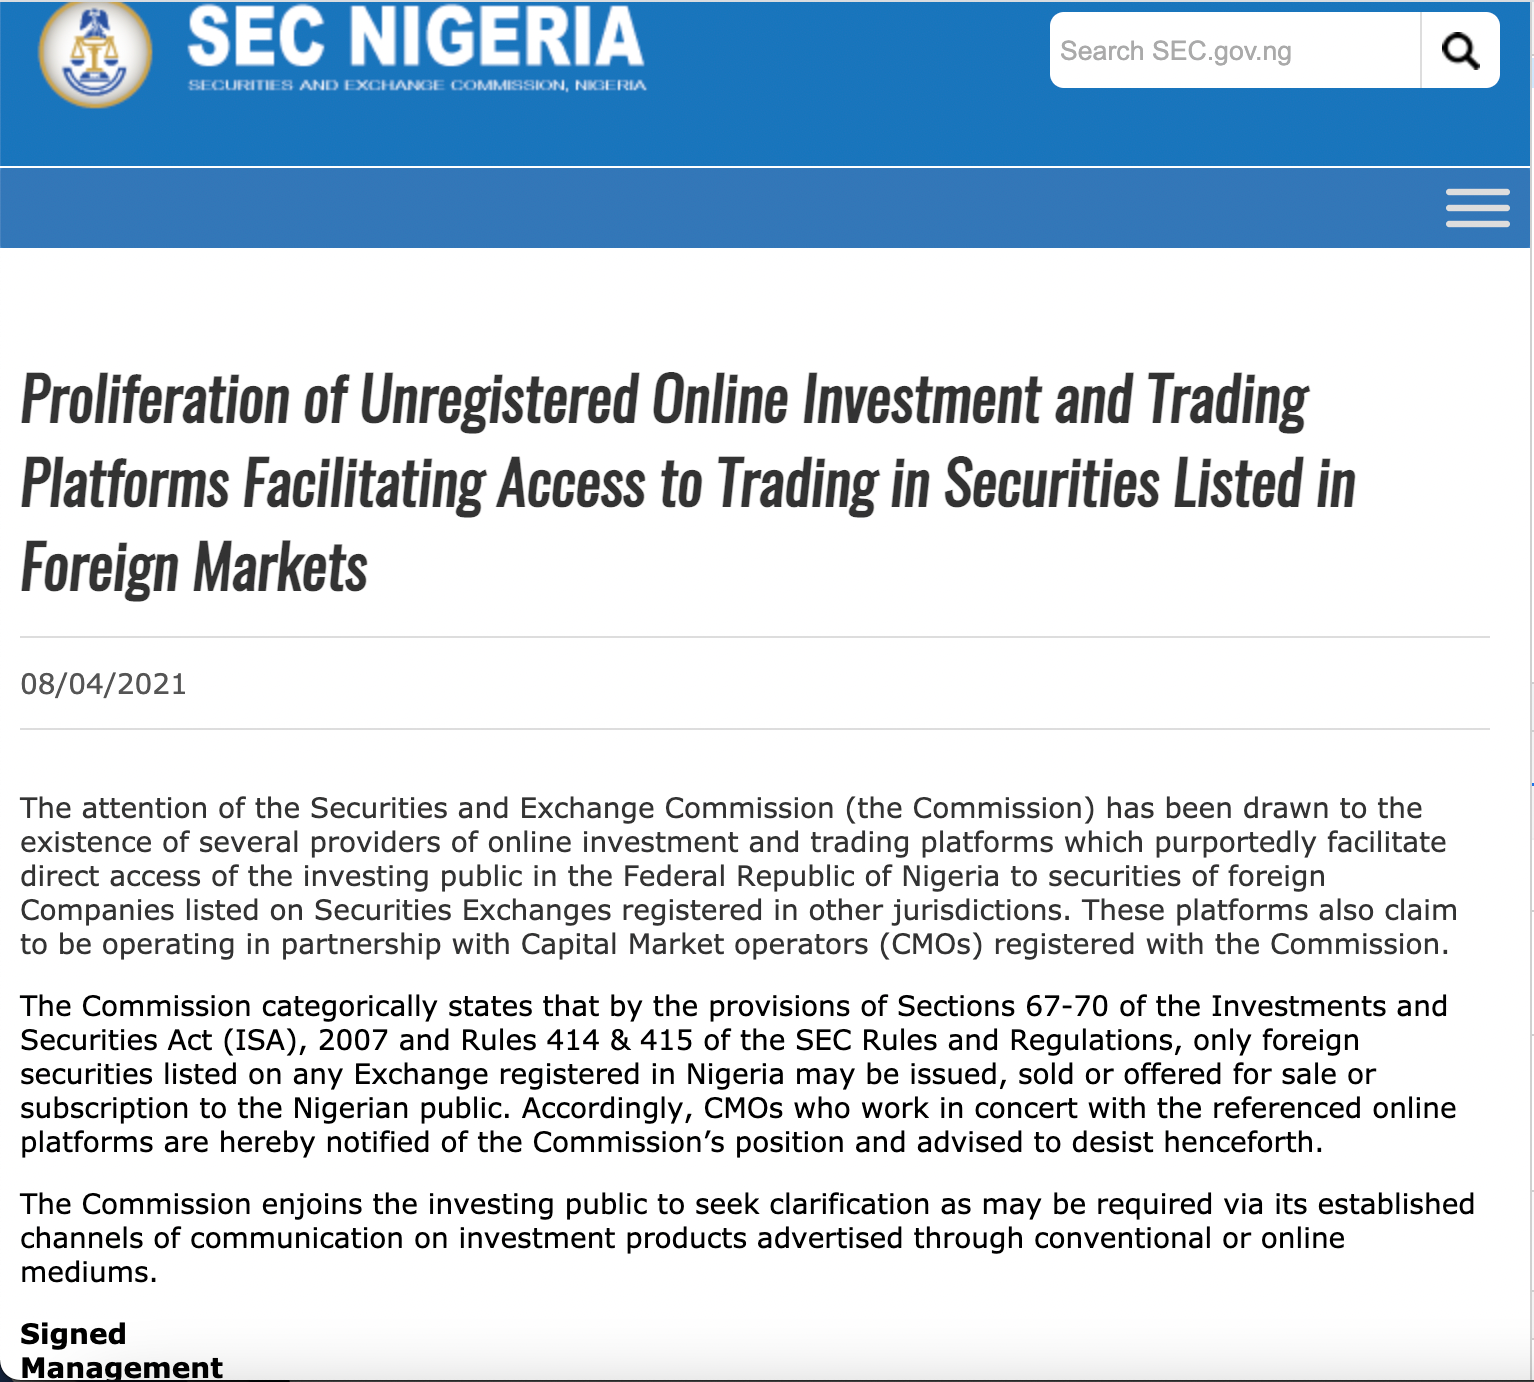 Nigeria's SEC circular to investment platforms on April 8, 2021